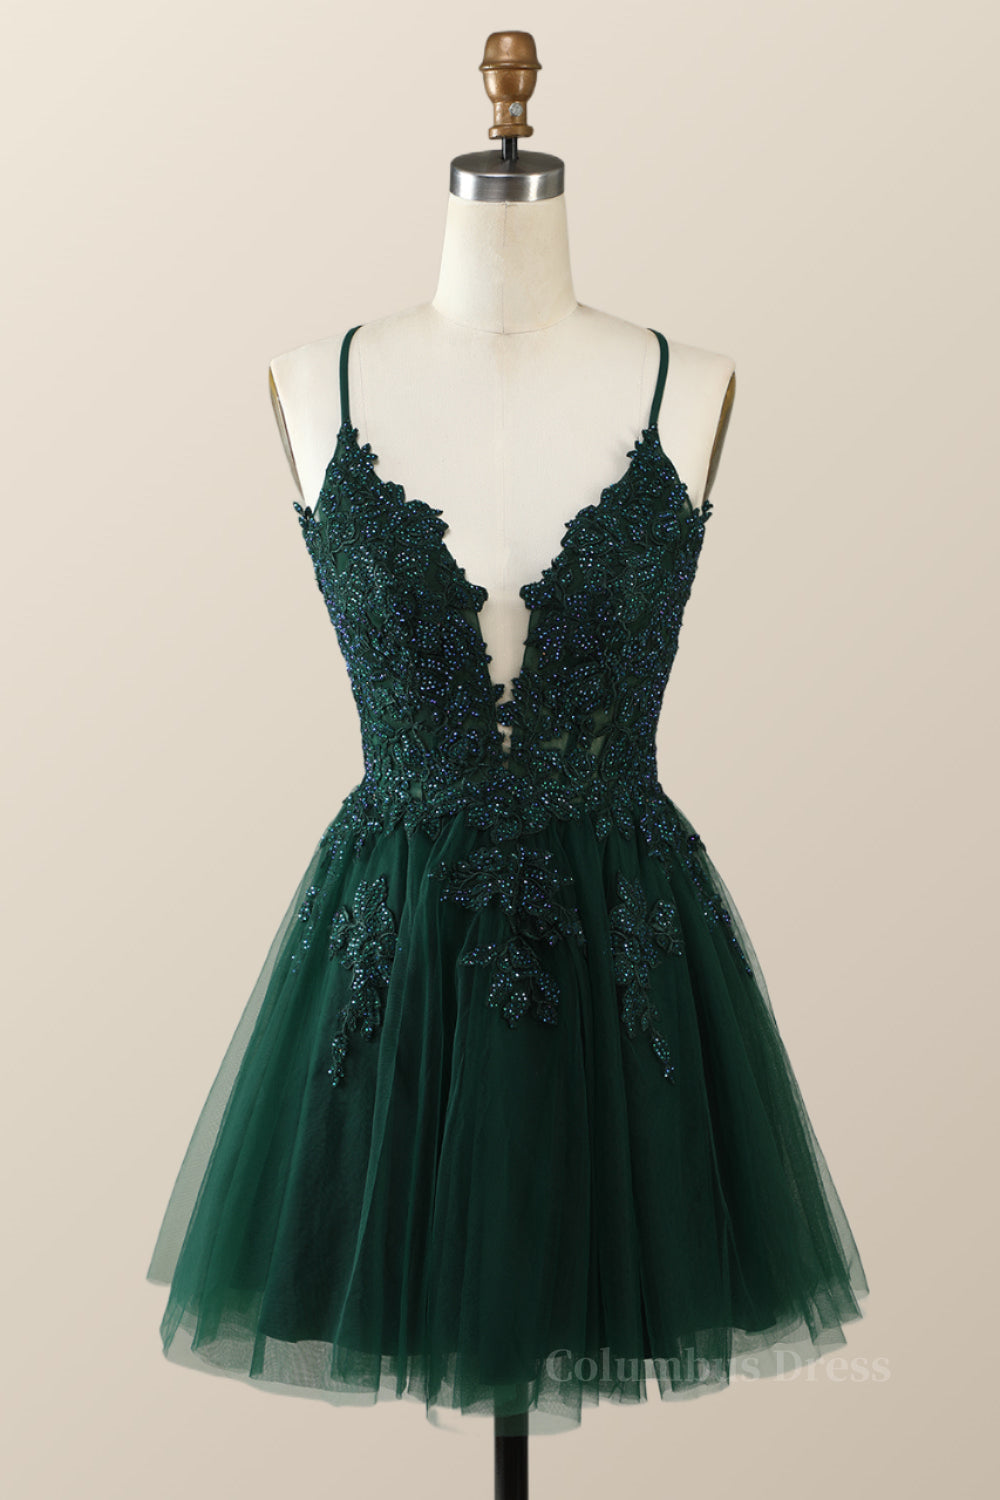 Prom Dress Different, Emerald Green Appliques A-line Short Homecoming Dress